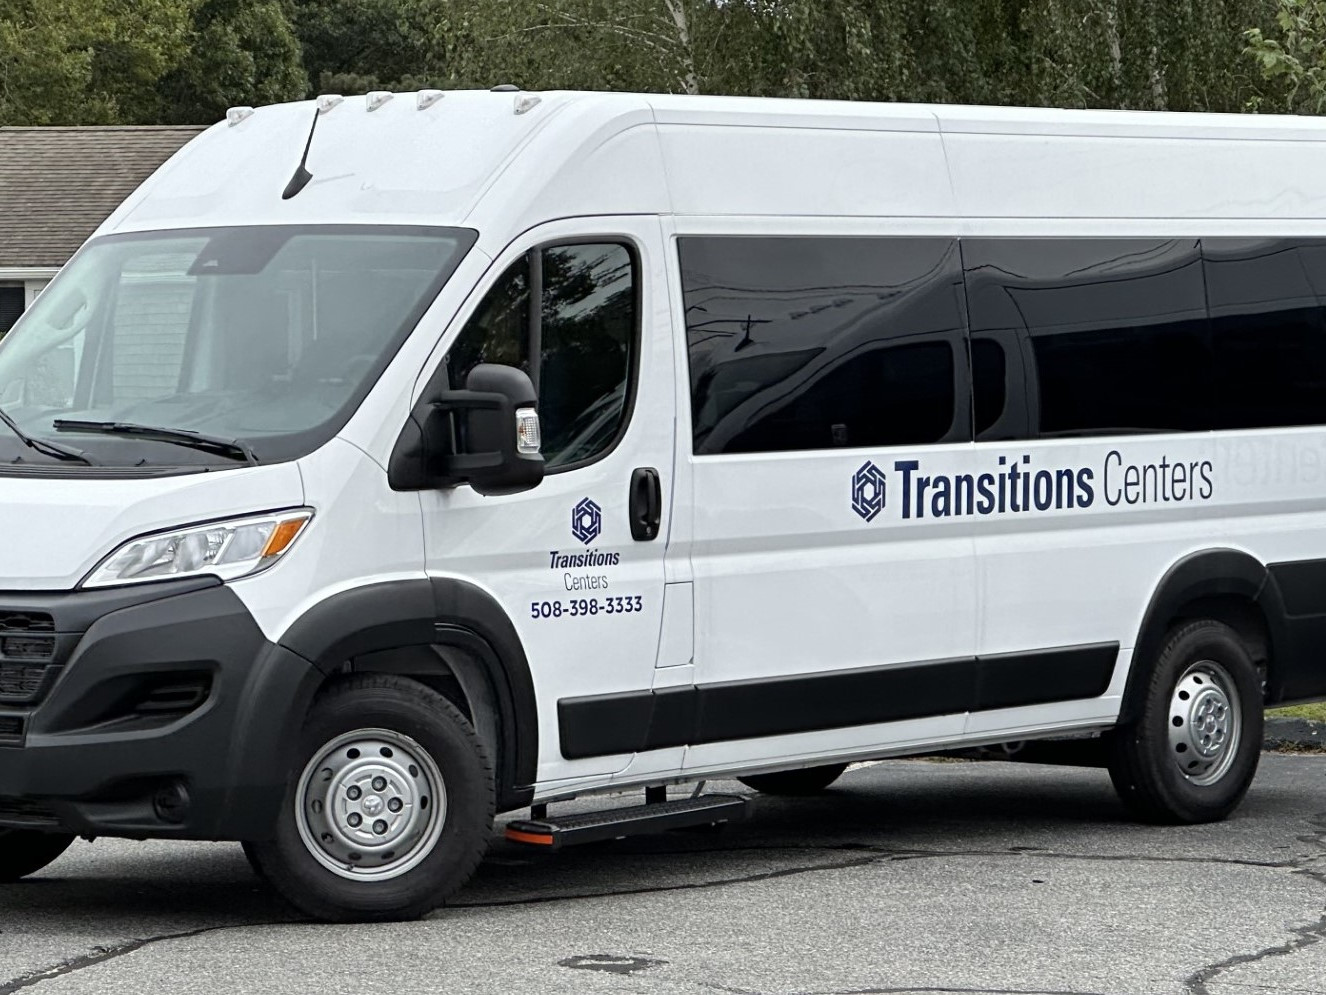 Large transportation van with Transitions logo